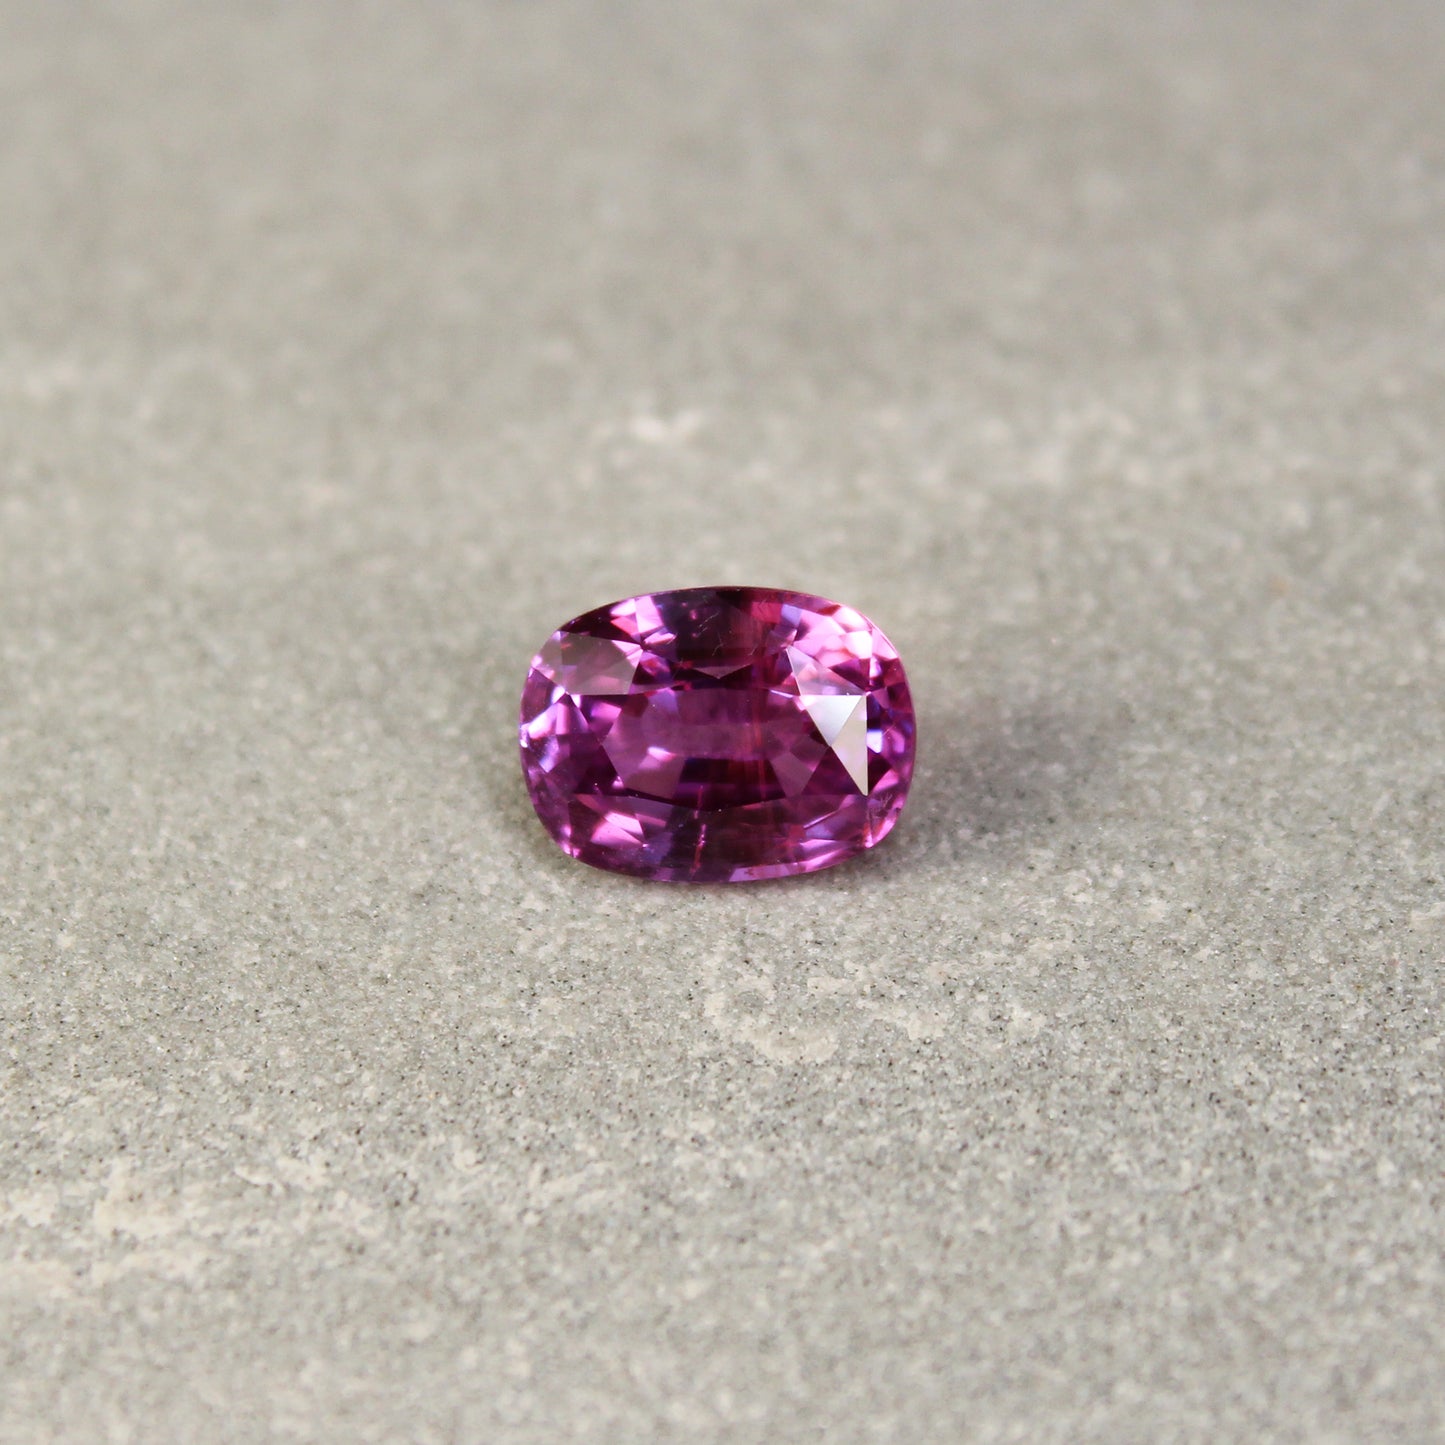 2.67ct Purple, Cushion Sapphire, No Heat, Madagascar - 8.72 x 6.52 x 4.86mm